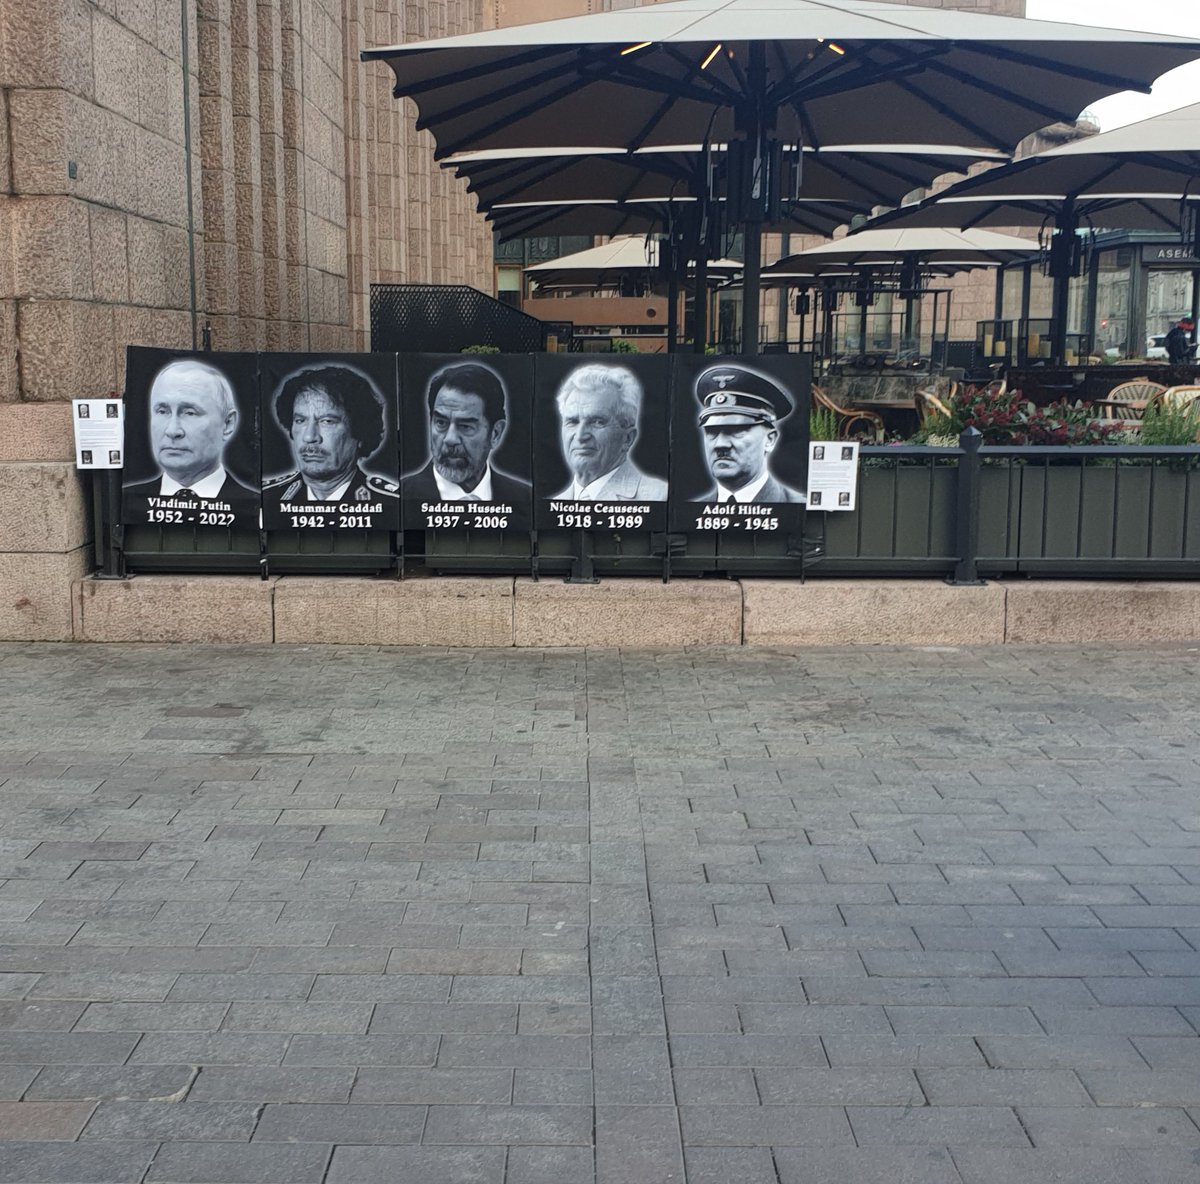 RT @GloDf: Right now outside the Helsinki railway station .. https://t.co/qNzpokdf9P